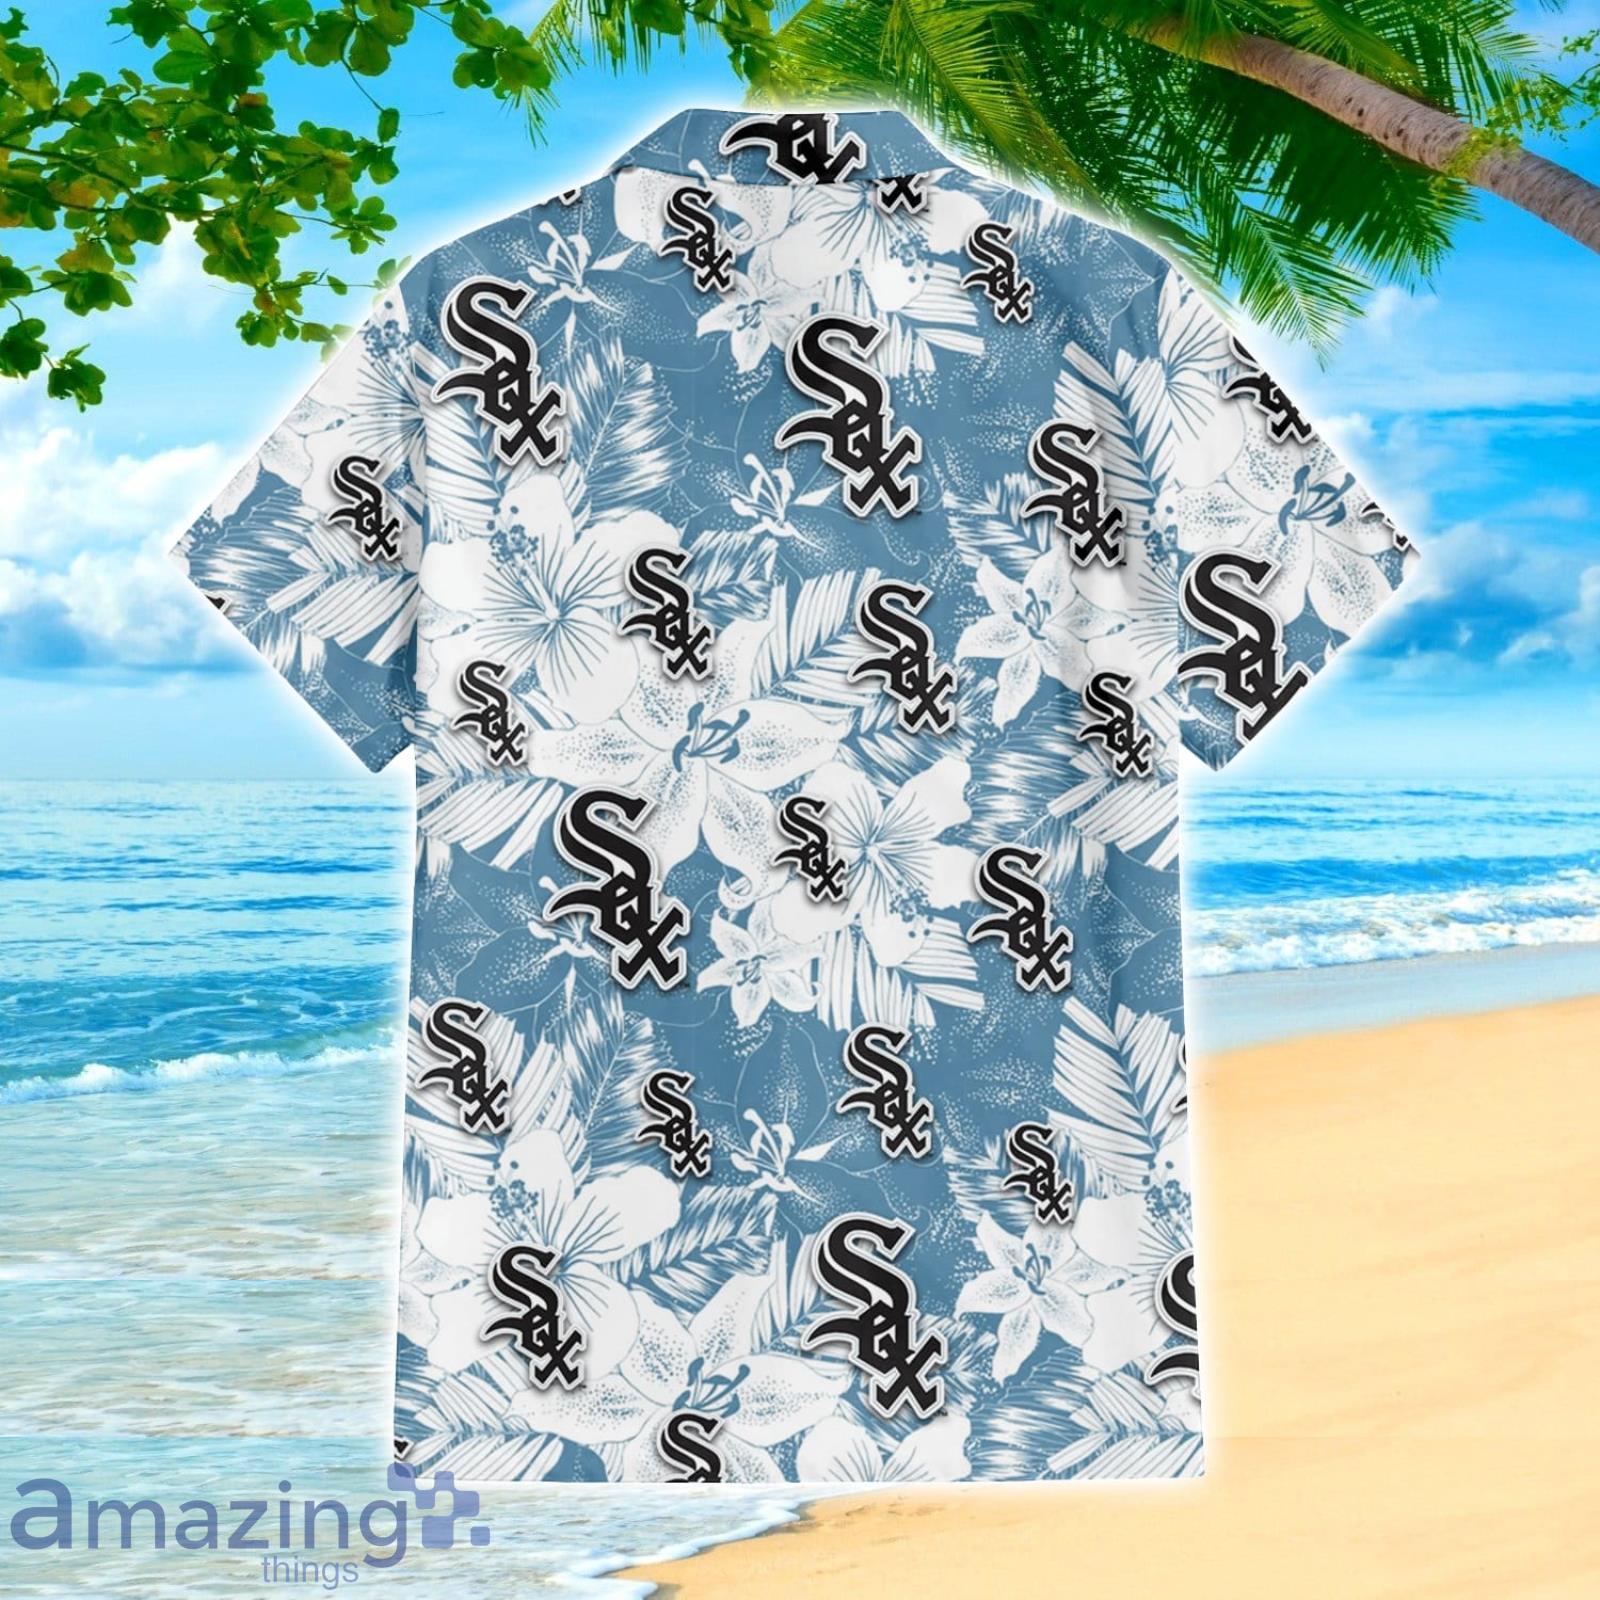 White Sox Chicago Hawaiian Shirt Beach Shorts